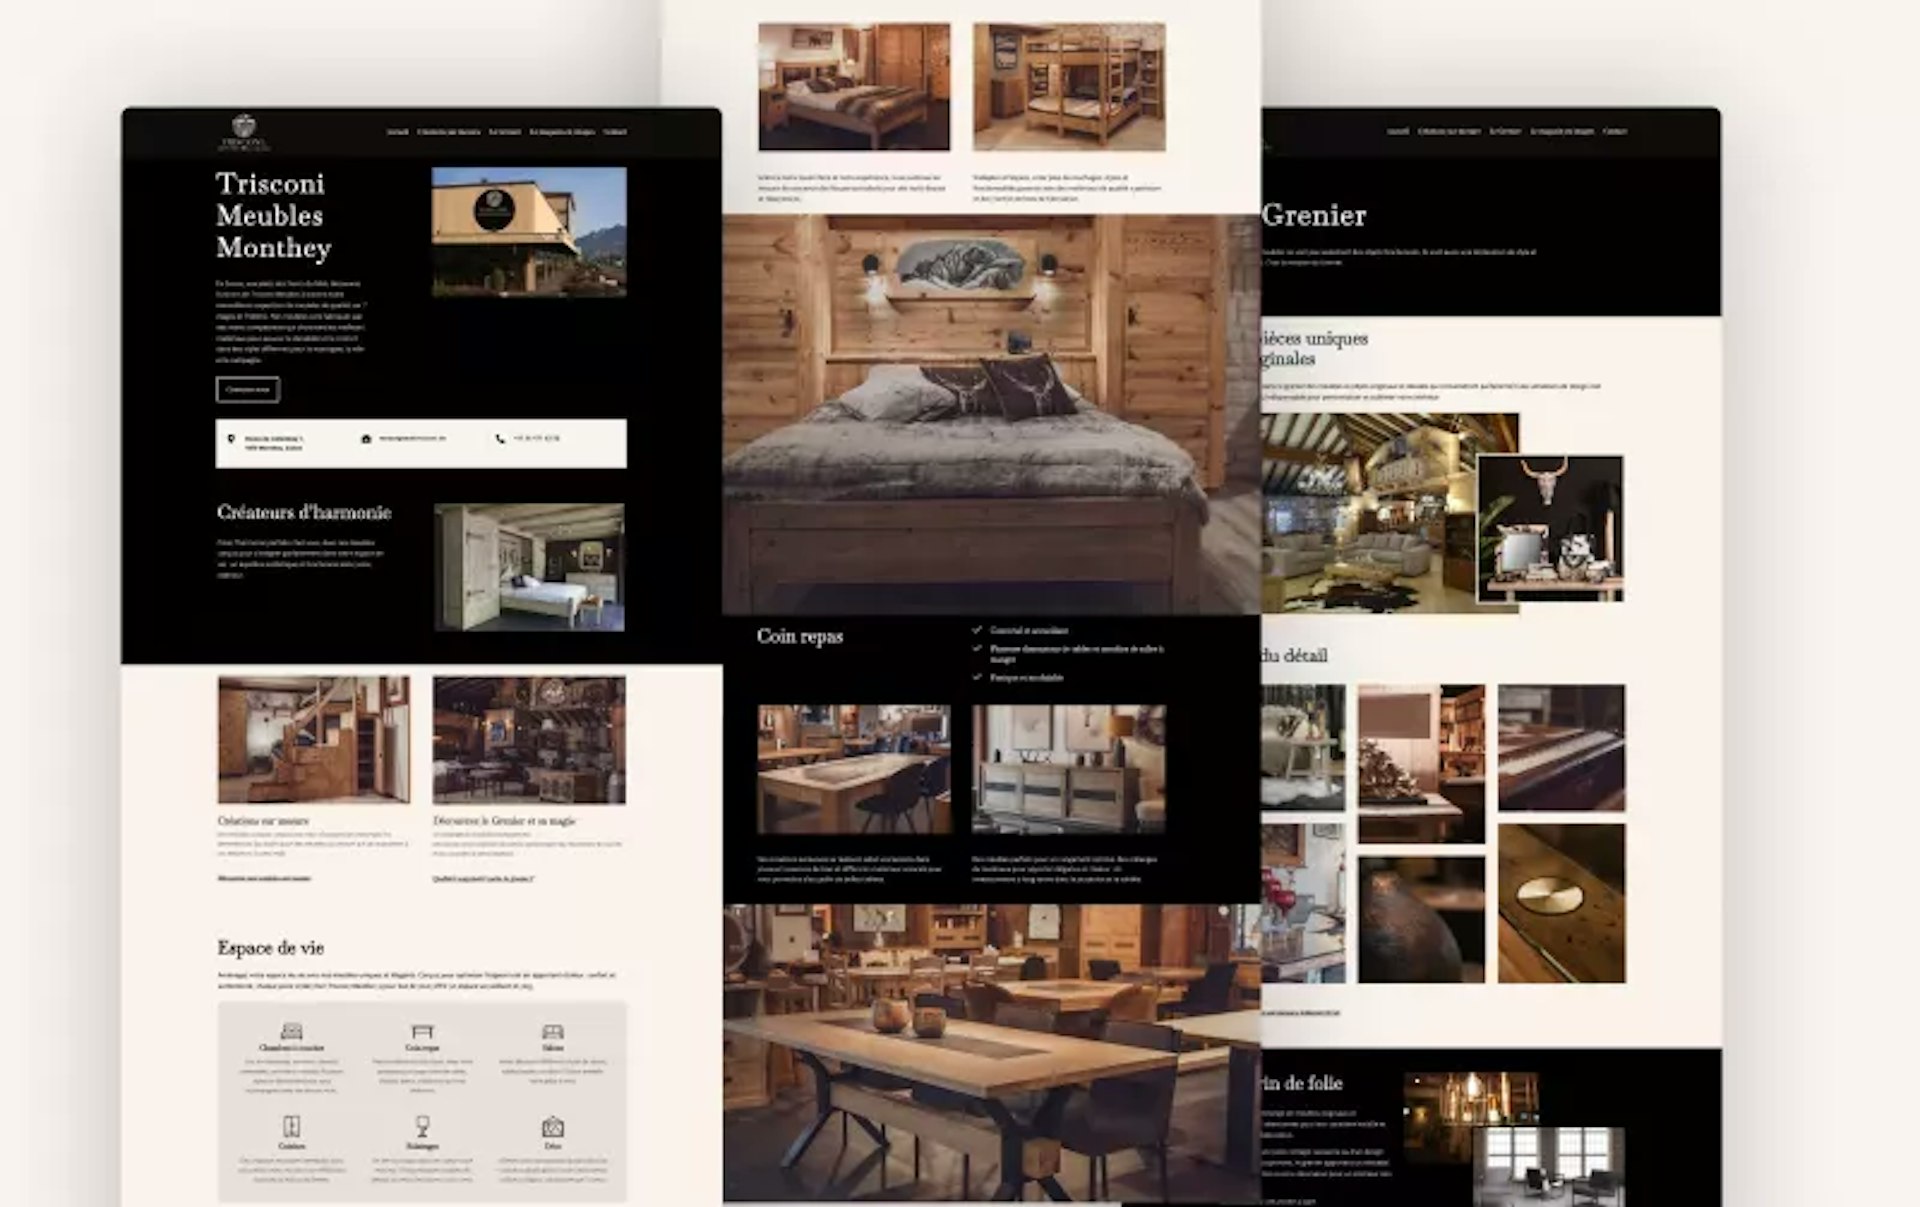 Mockup of Trisconi furniture website, UI design